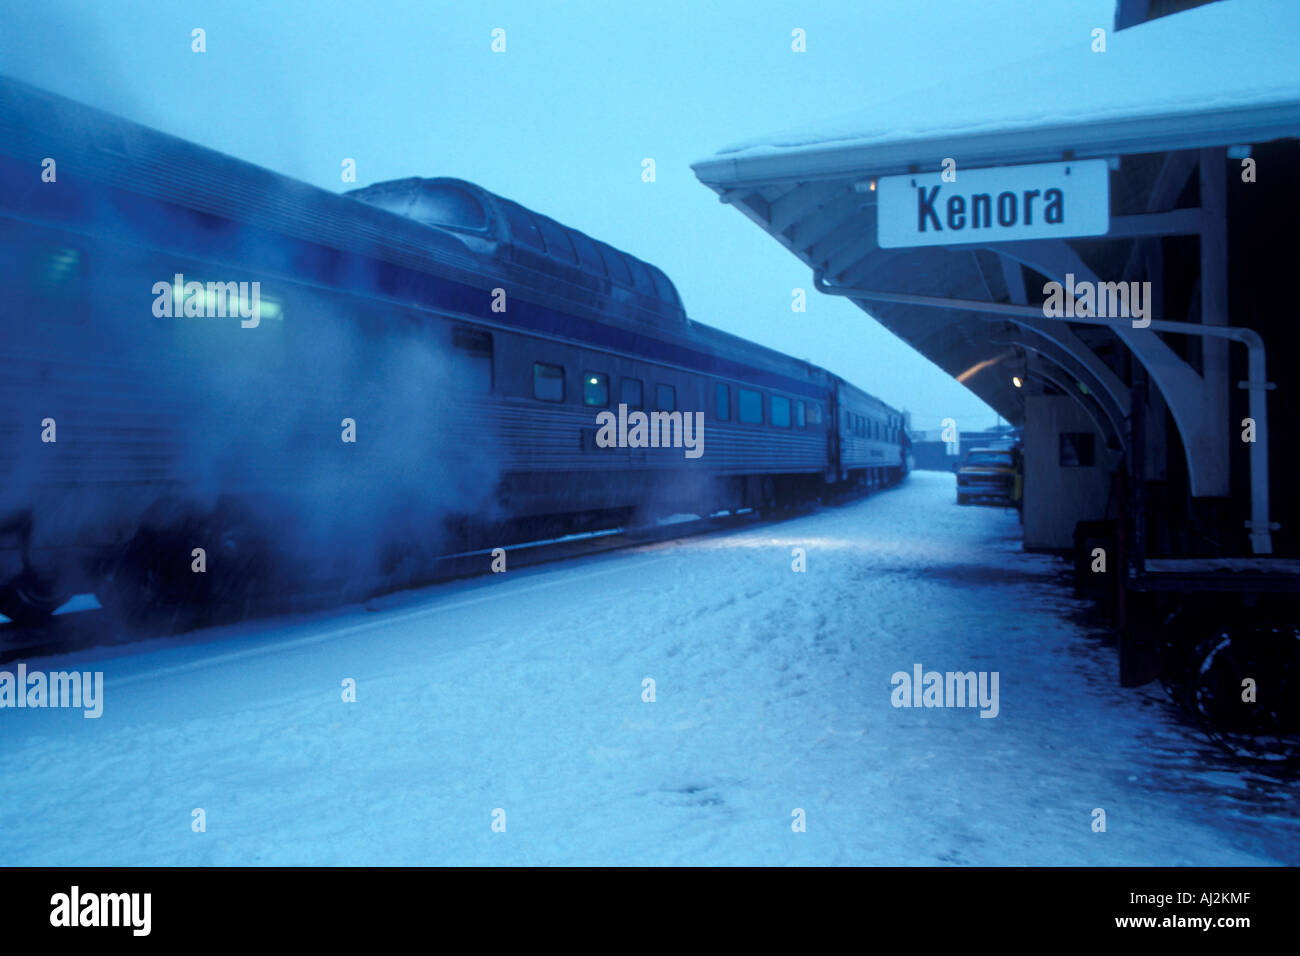 Canada Ontario VIA Rail passenger train in snowstorm at station in Kenora Stock Photo